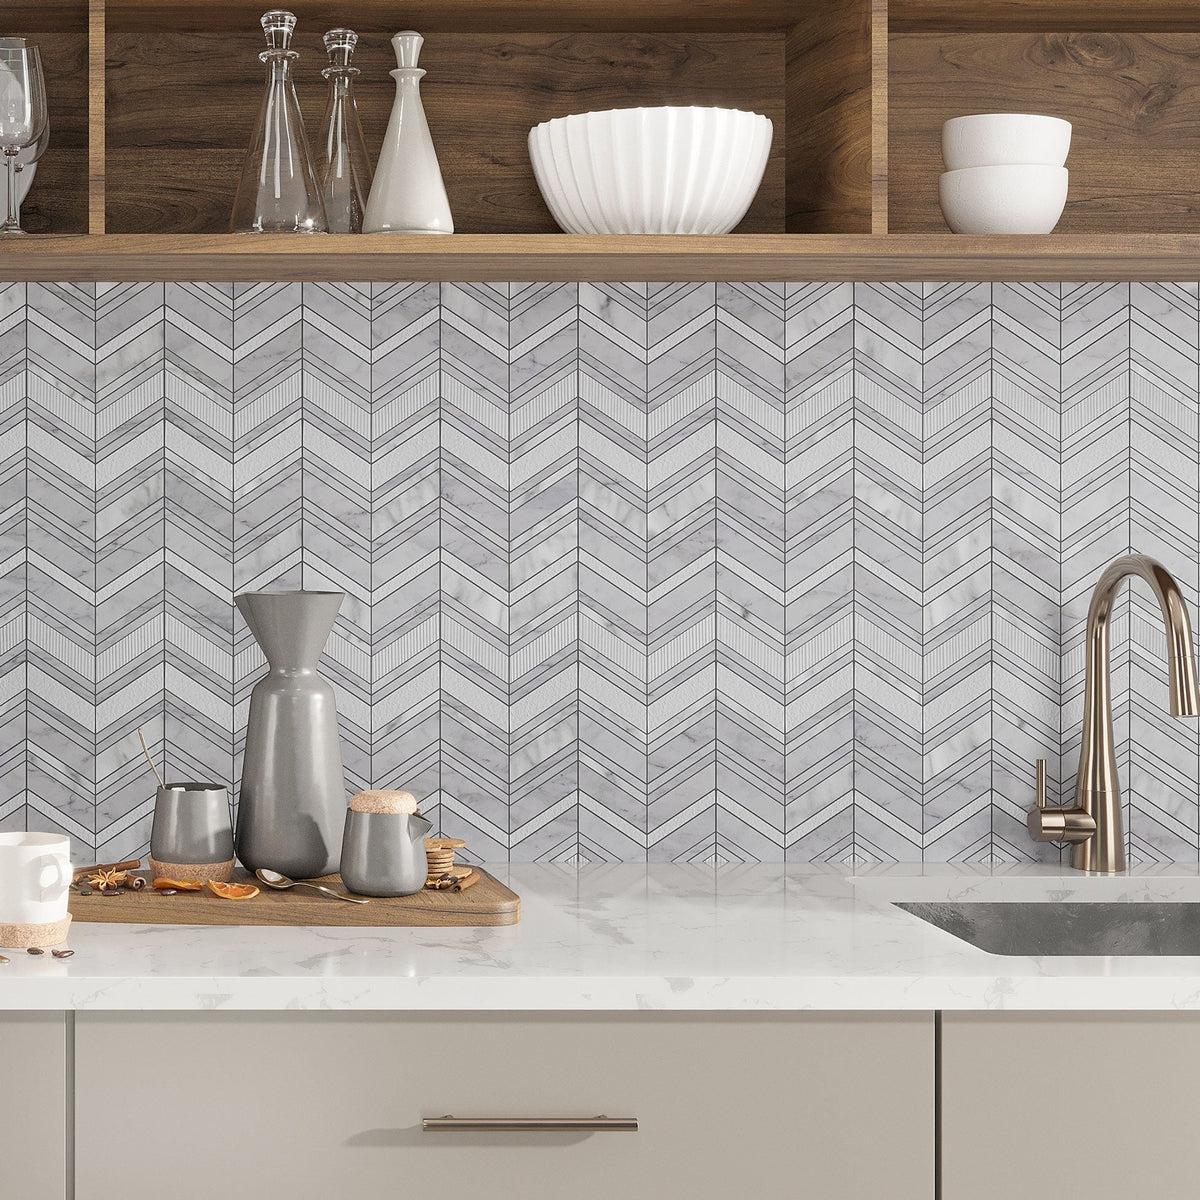 Textured herringbone marble kitchen backsplash tile